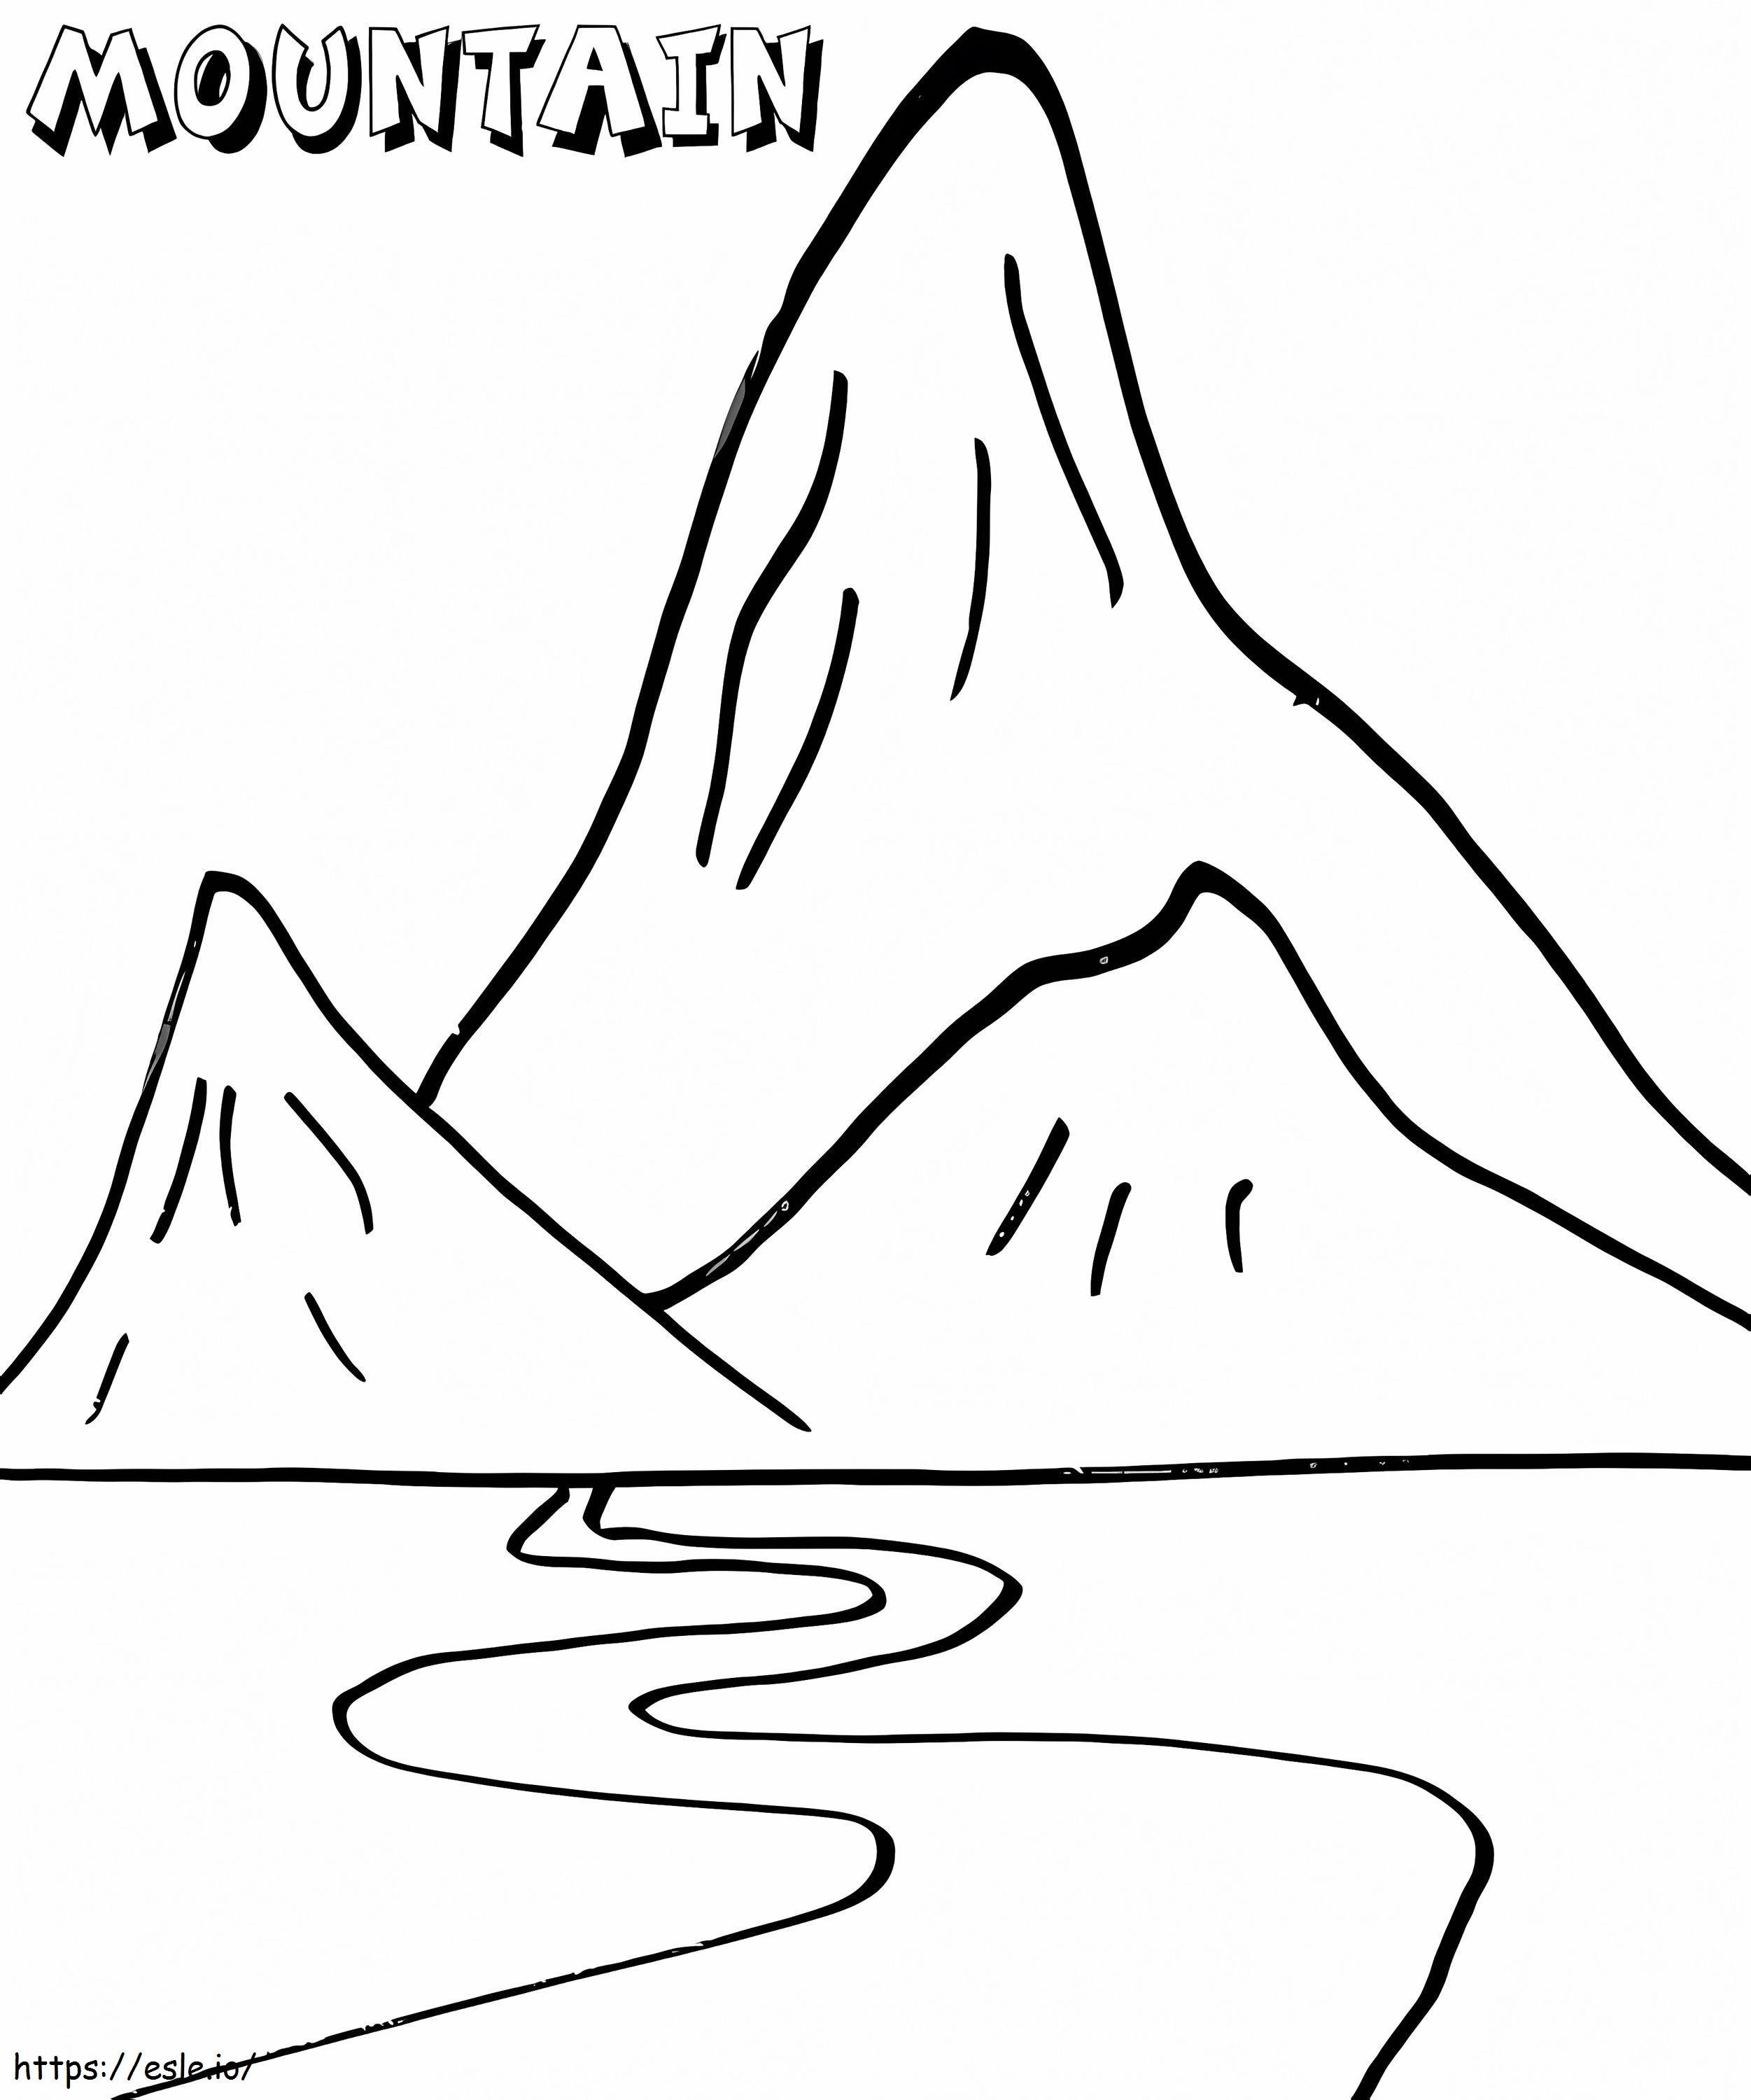 Drei Berge ausmalbilder